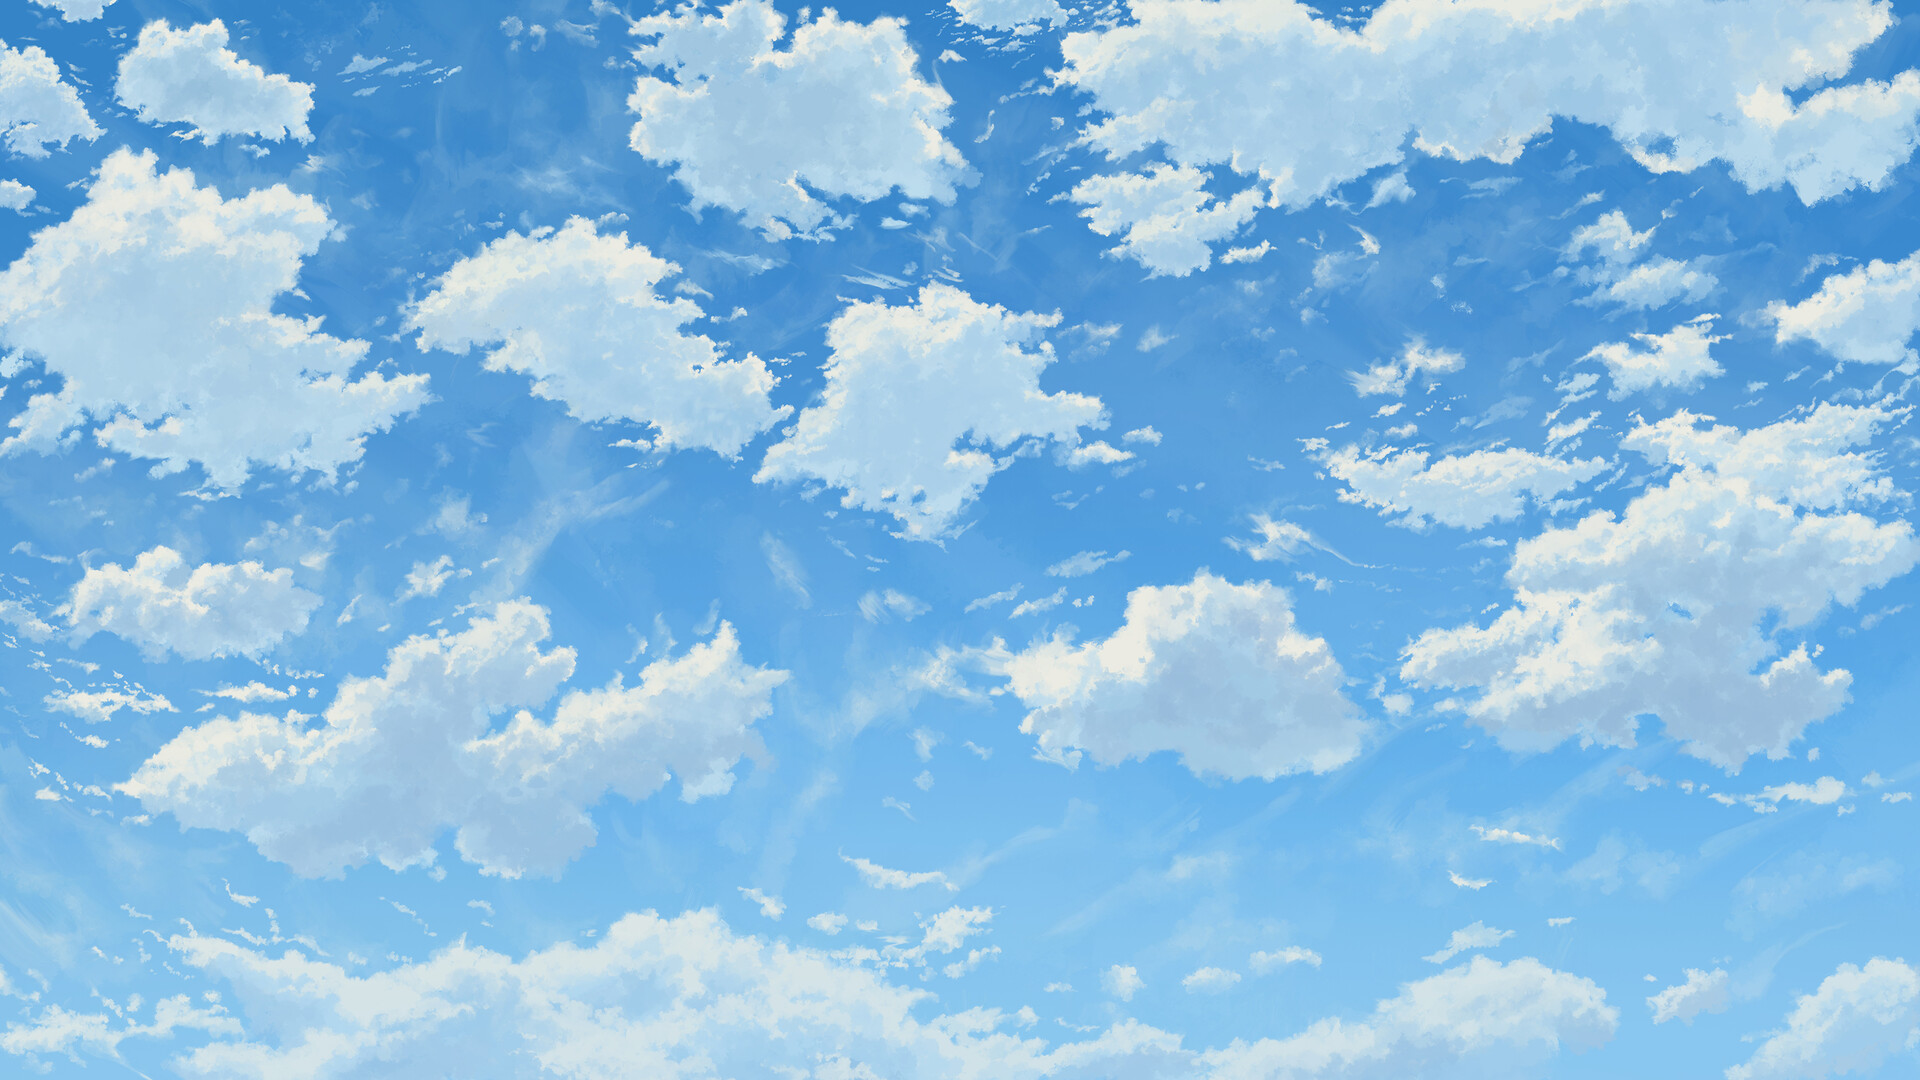 TJ Artist Digital Art Nature Sky Clouds 1920x1080